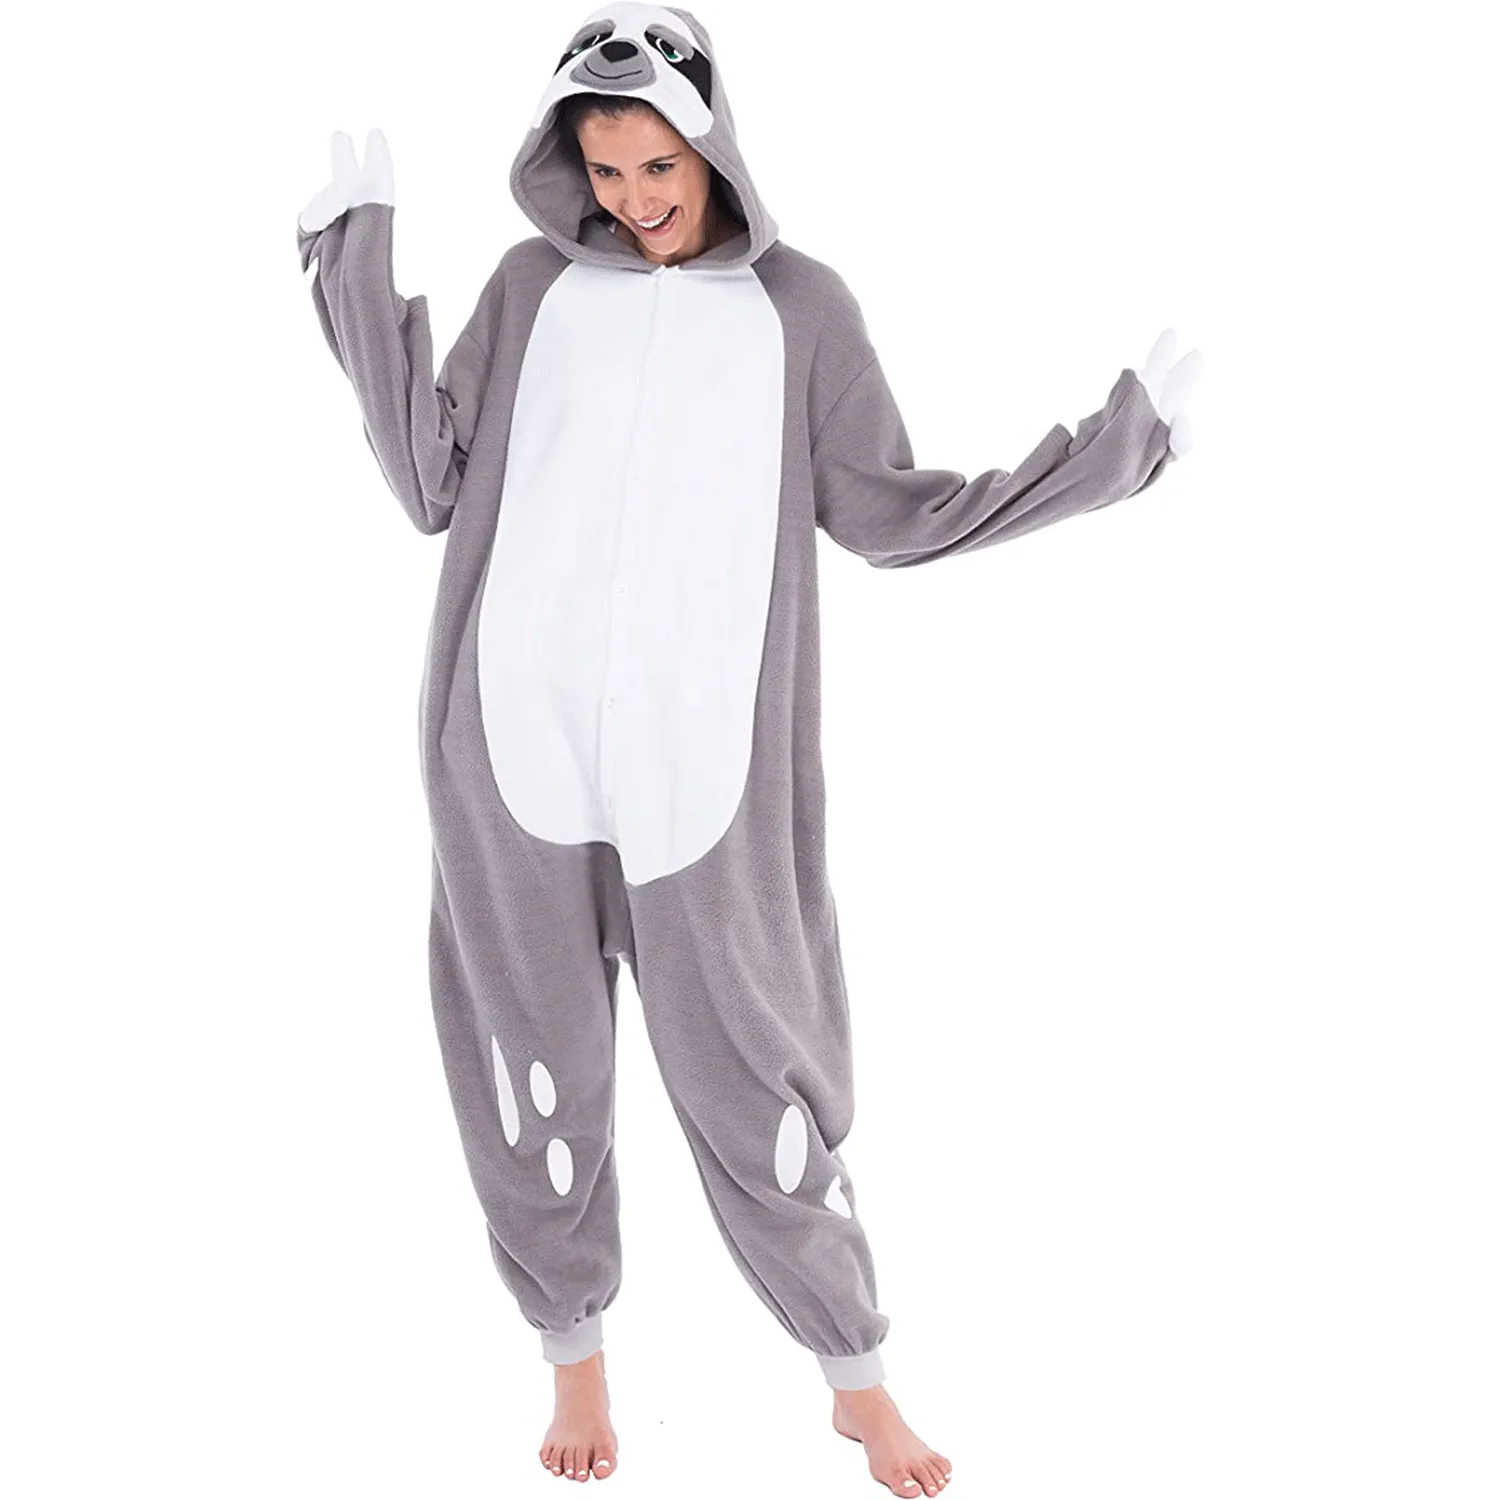 Sloth animal pajama Halloween costume adult